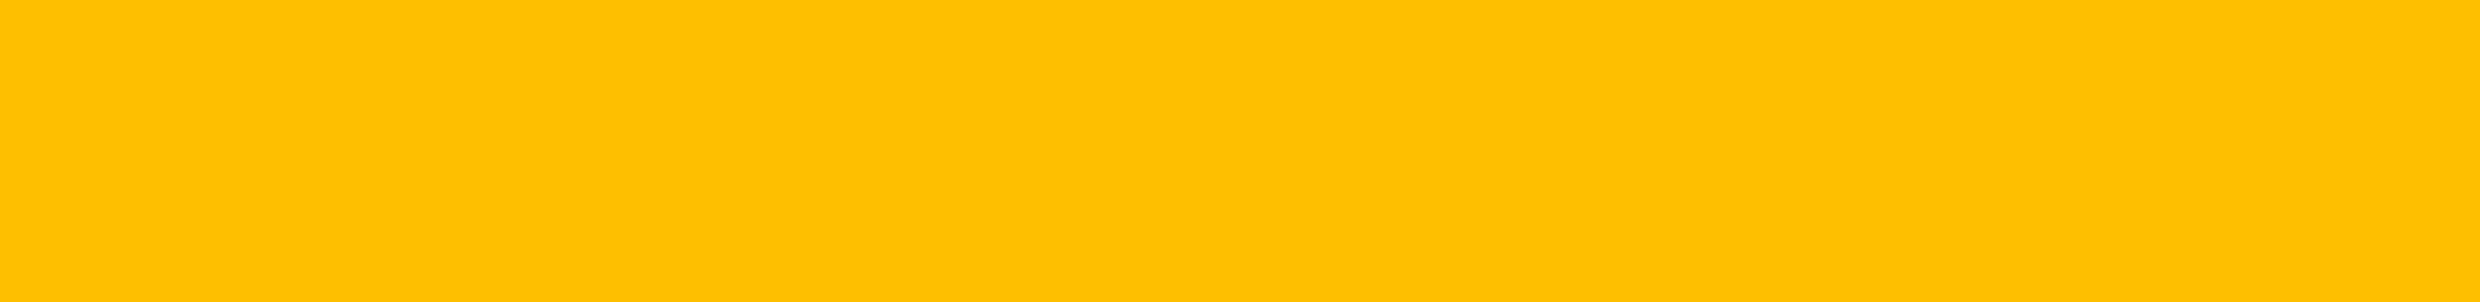 yellow banner fr